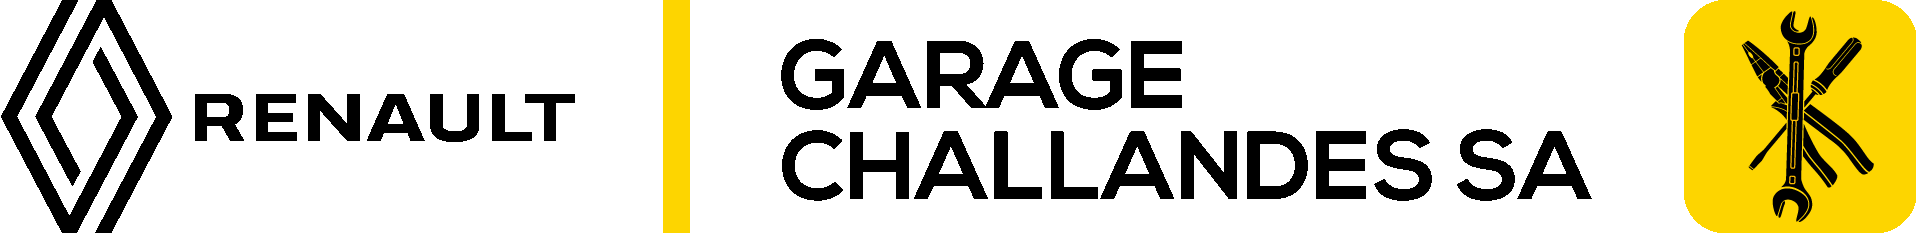 LogoGarageChallandesSA2021